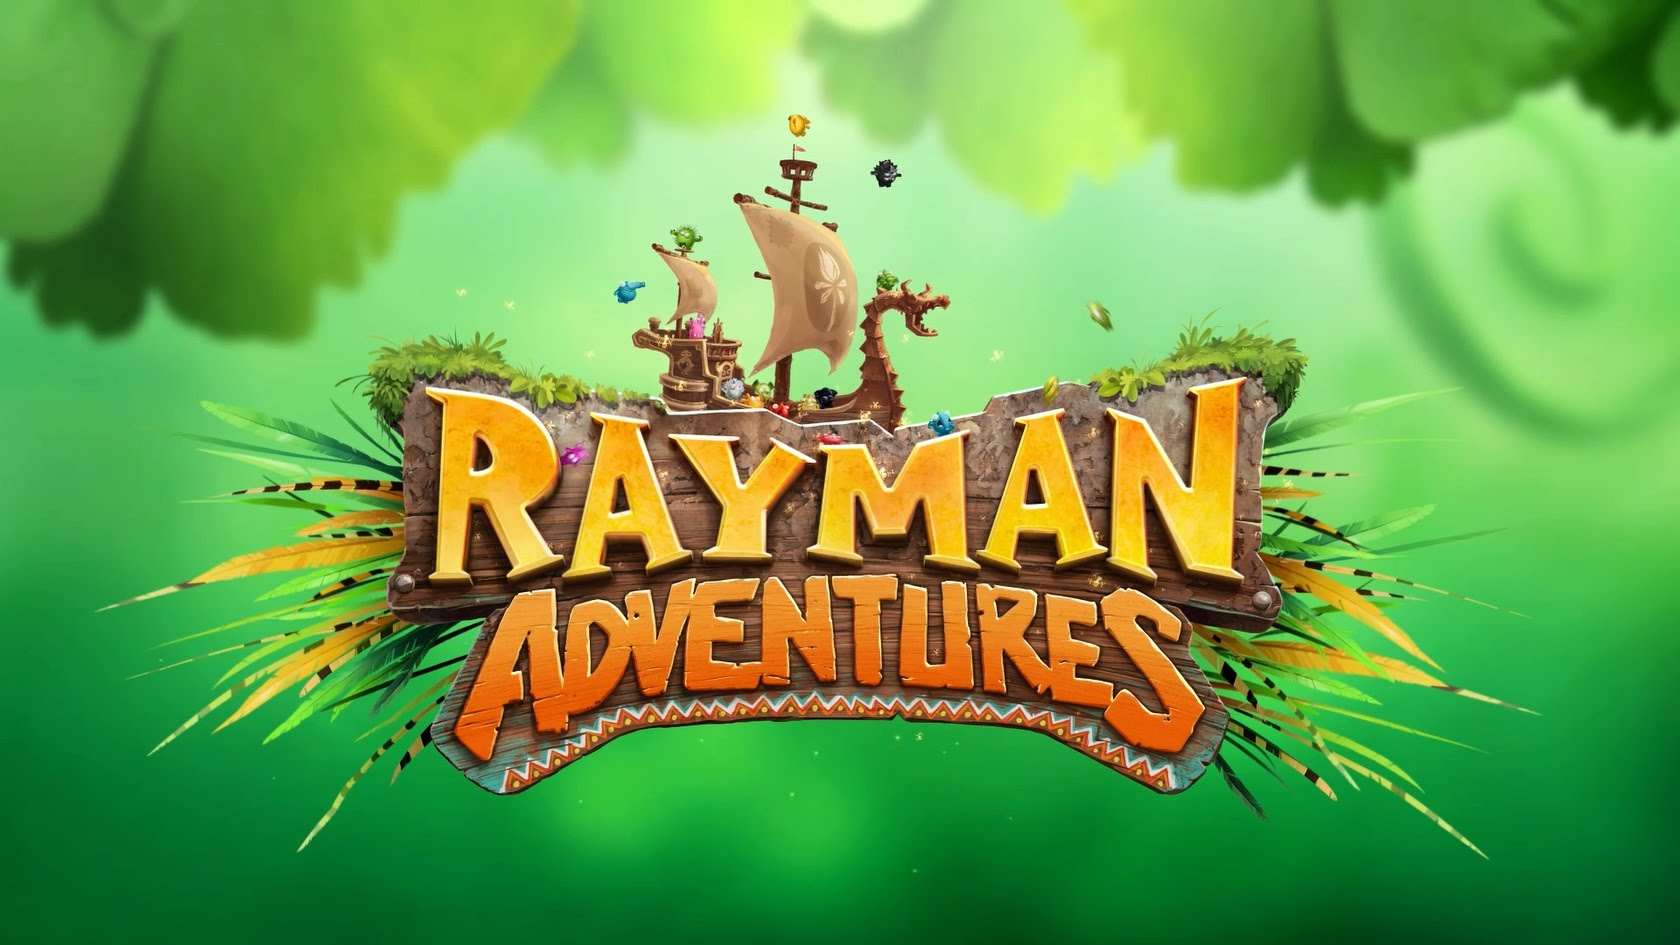 Rayman Adventures, Rayman Adventures android, Rayman Adventures apple tv, rayman adventures apk, rayman adventures logo,